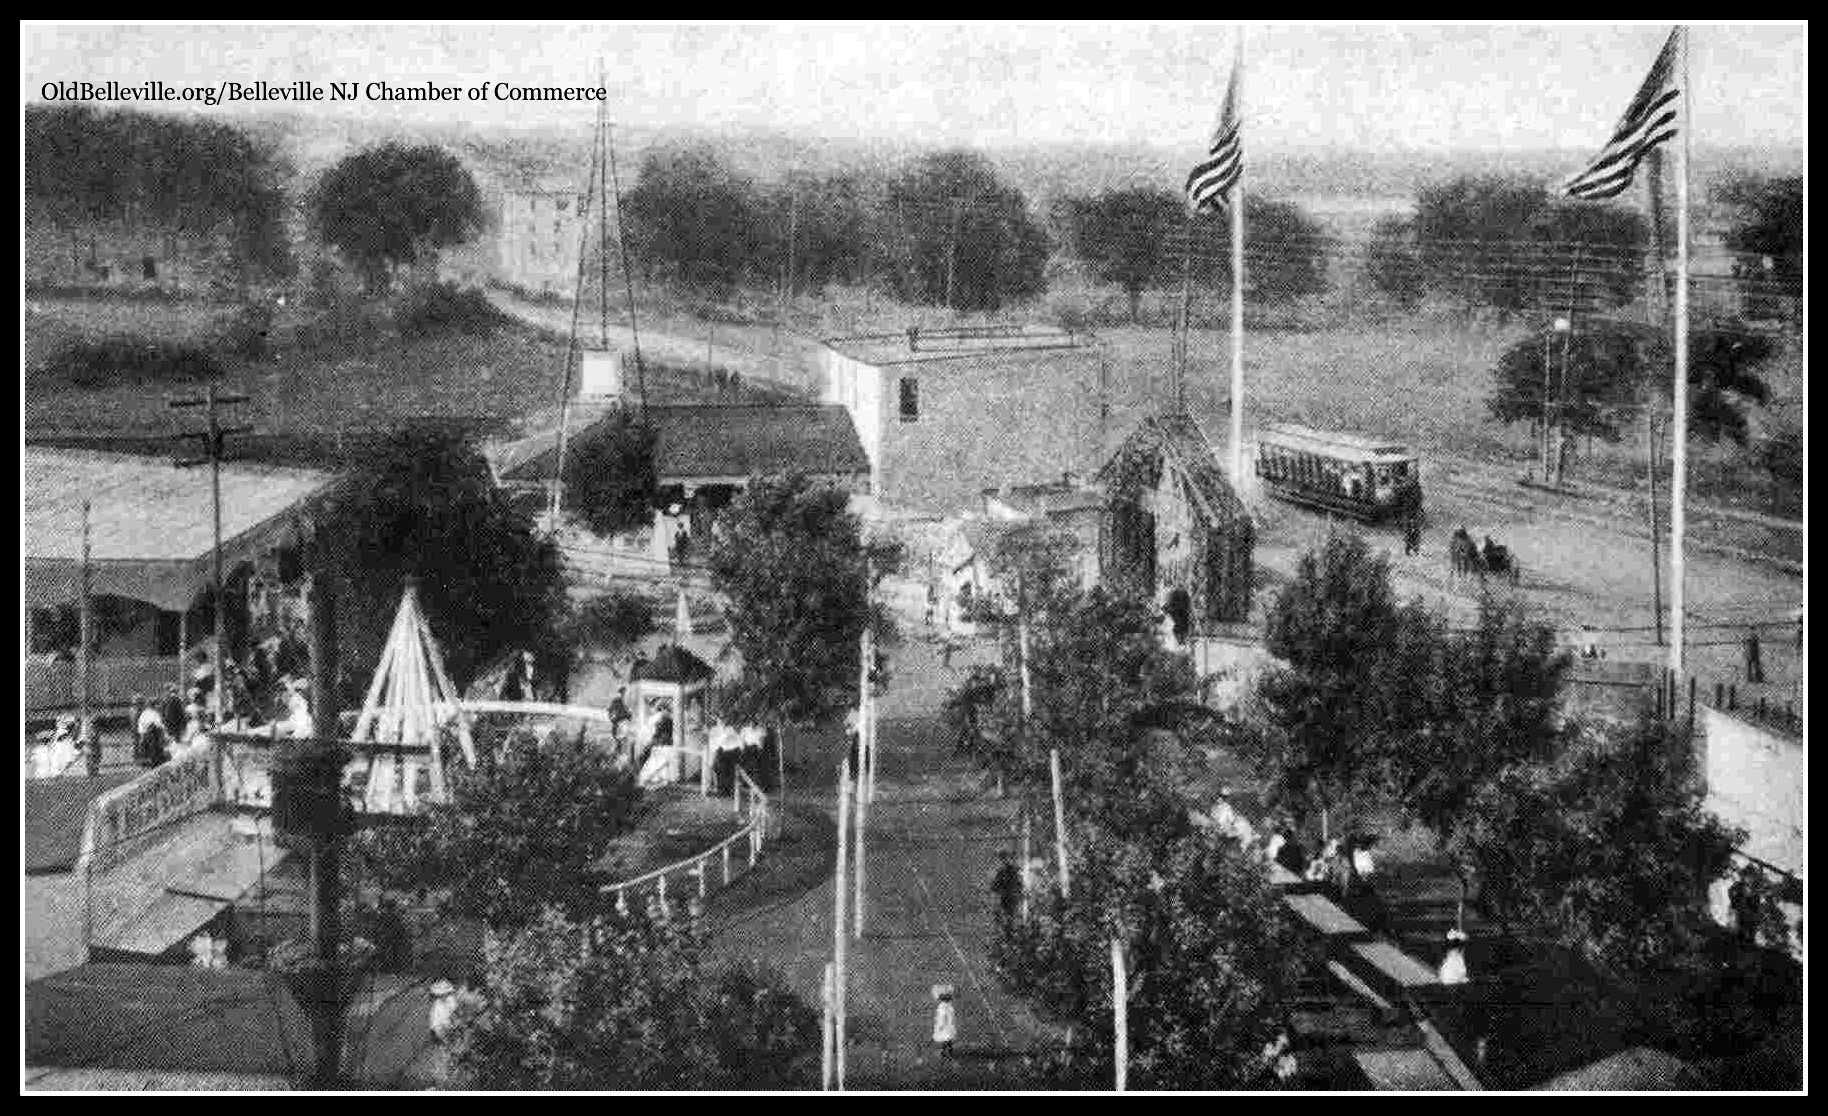 Hillside Pleasure Park, Bellevillle NJ, circa 1902